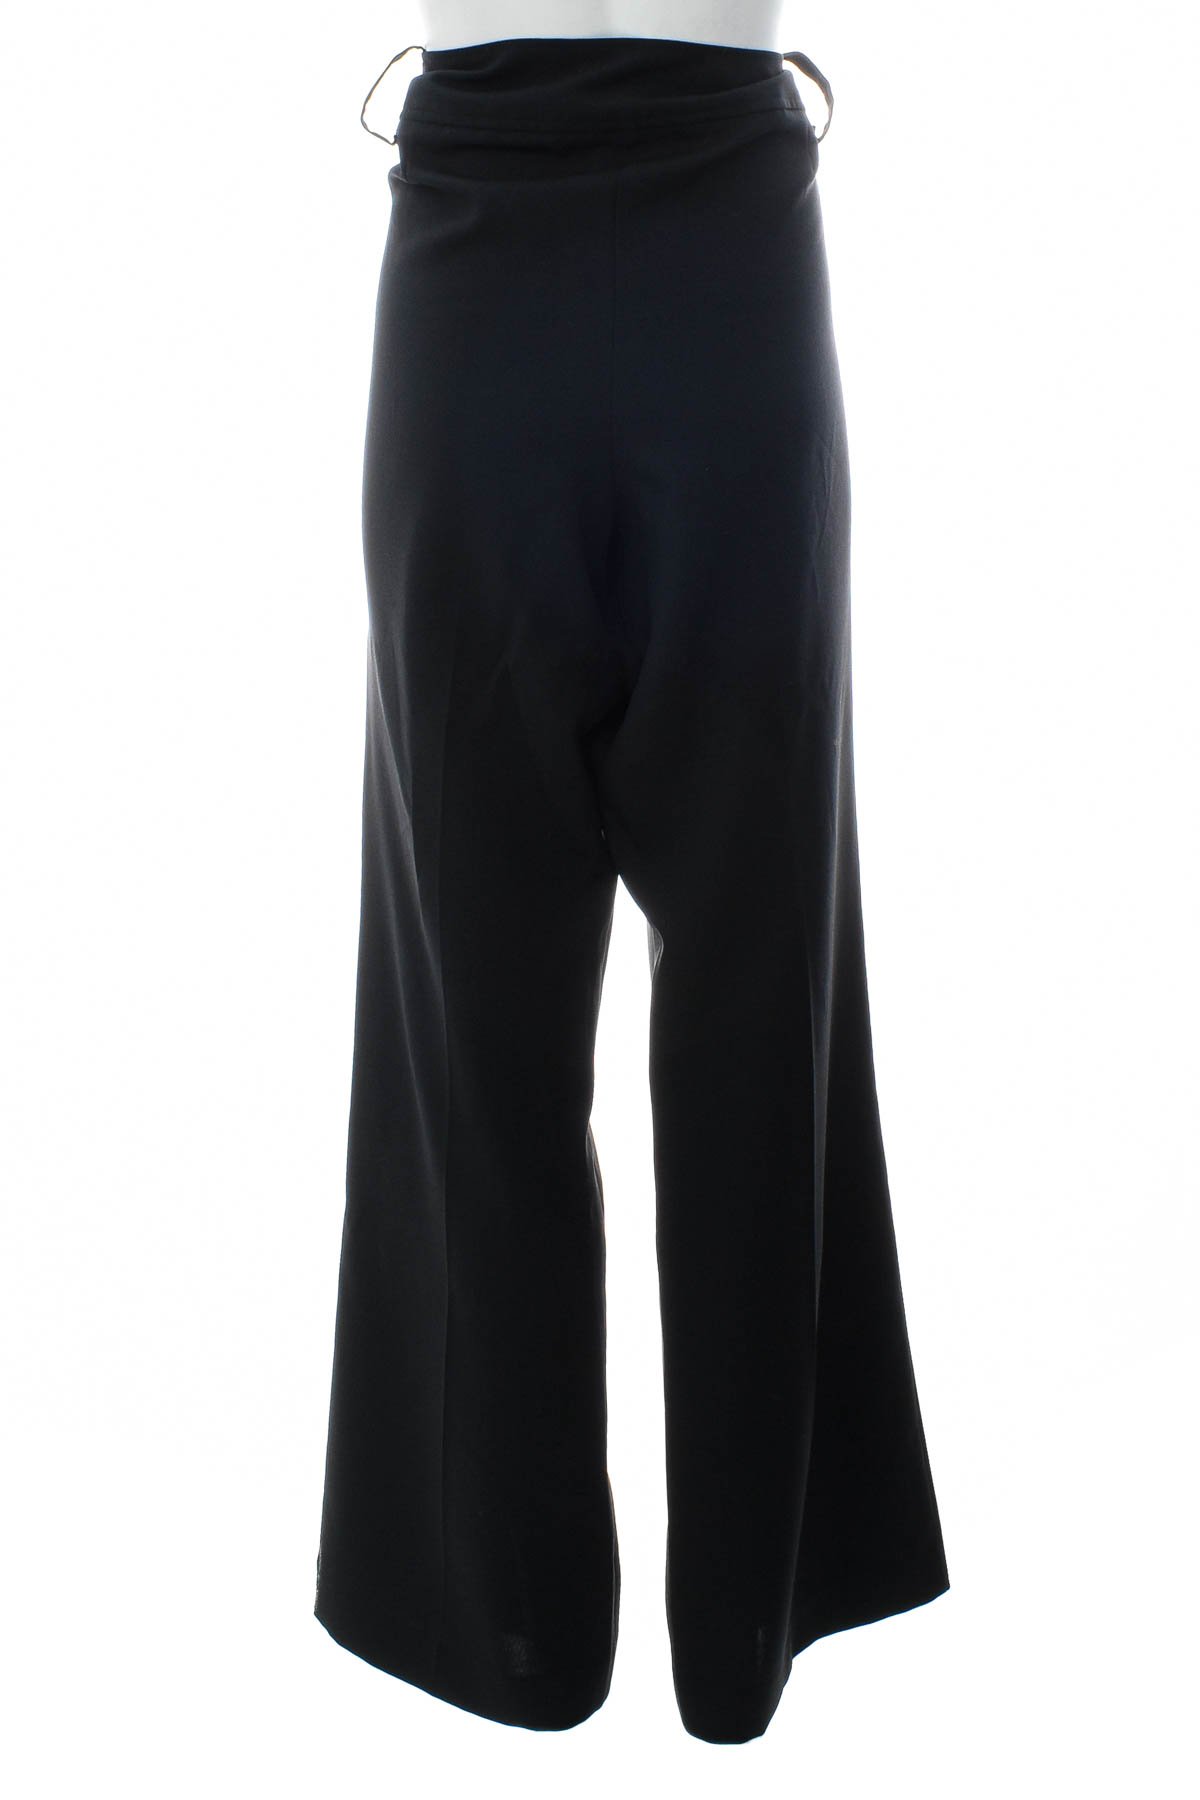 Women's trousers - Inspire New Look - 1